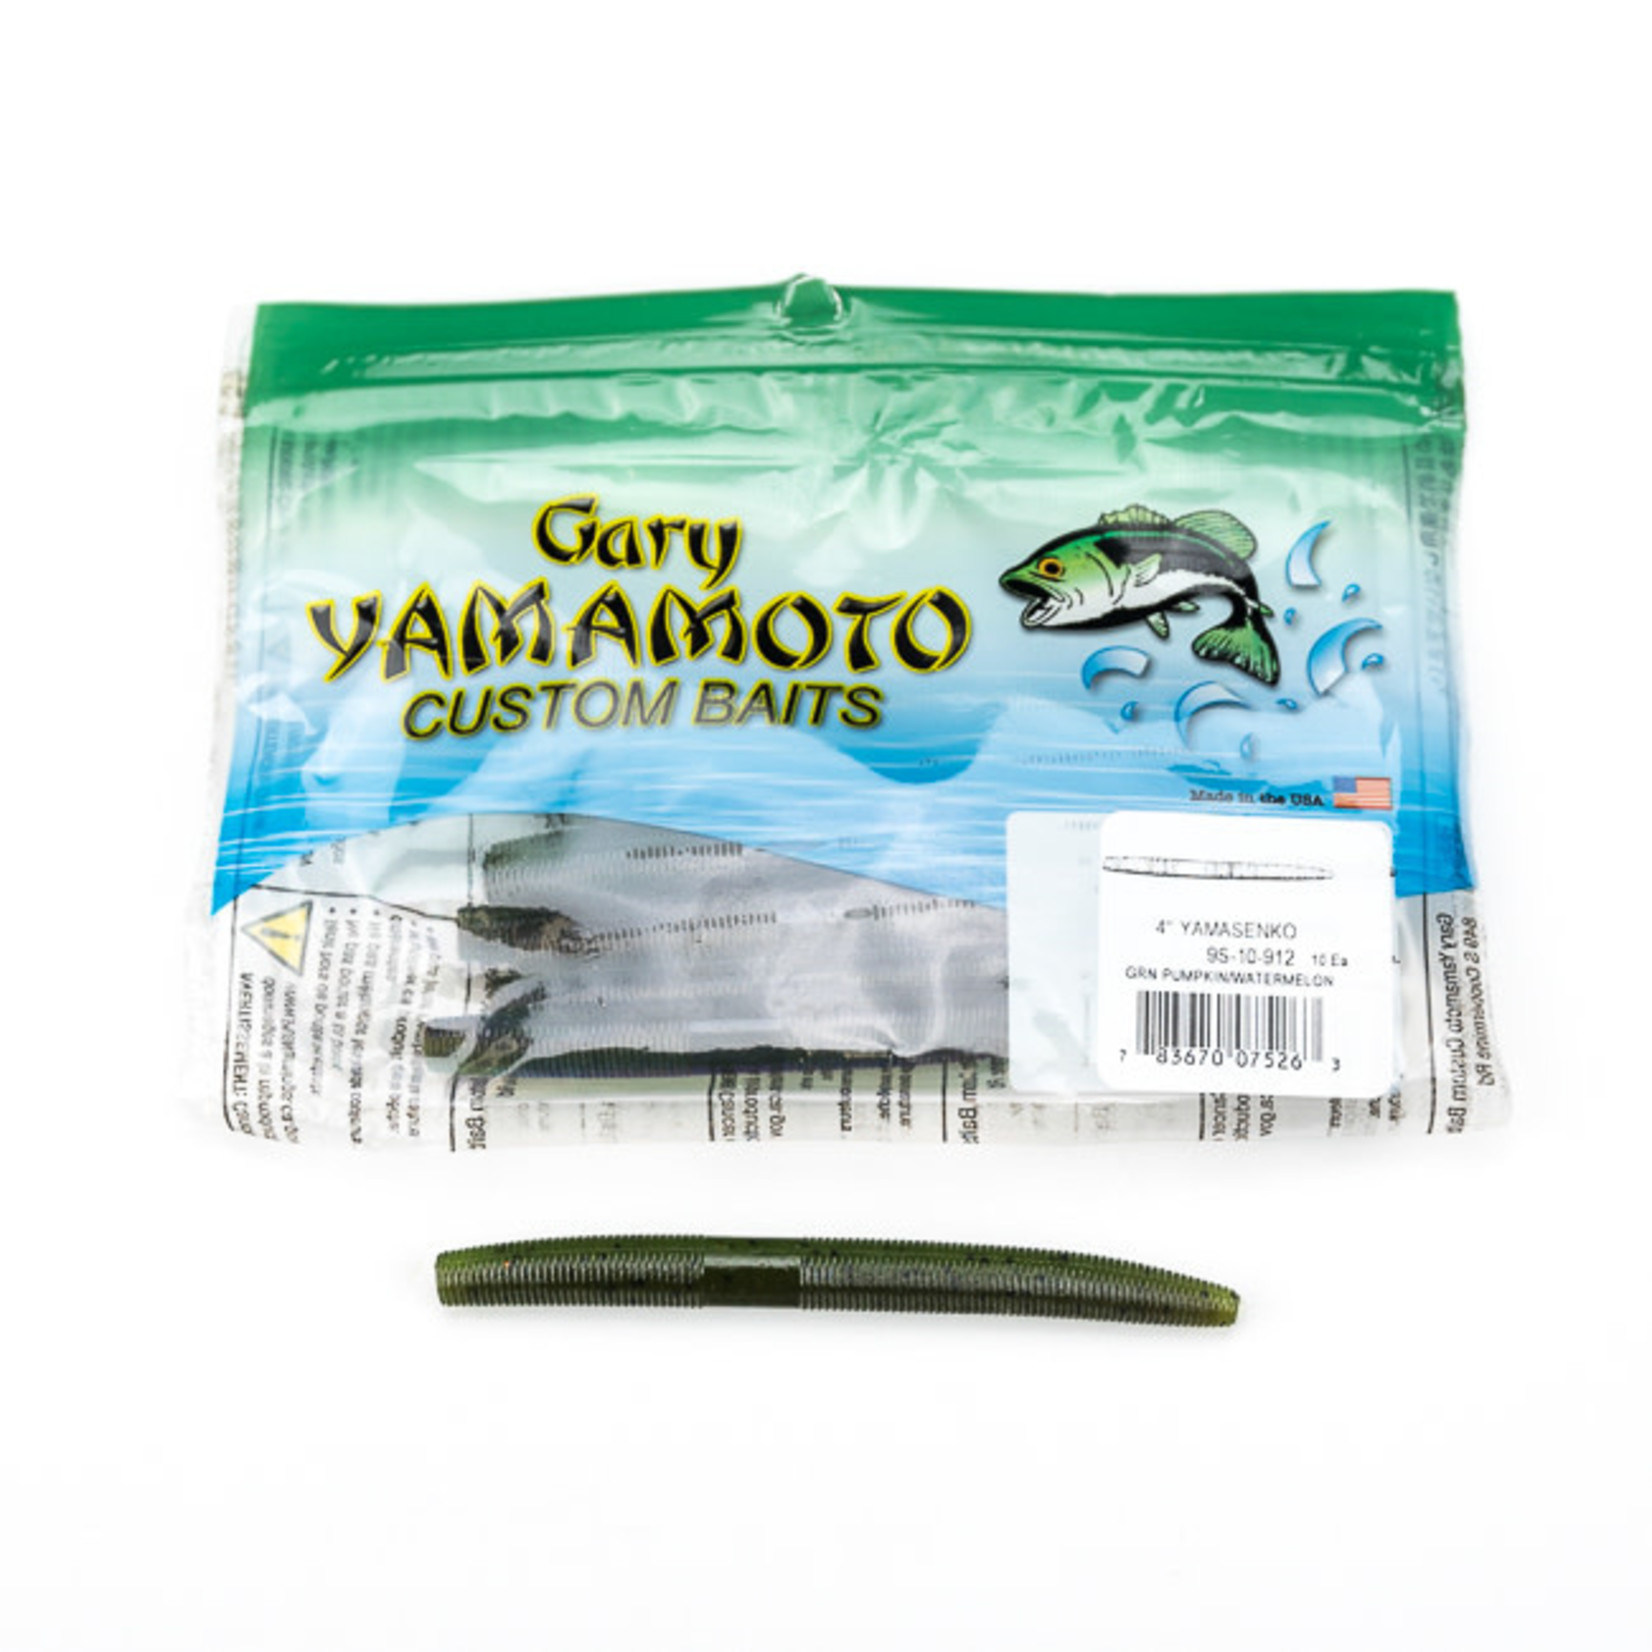 Yamamoto Baits Yamamoto 9S-10-912 Senko Worm, 4", 10pk, Green Pumpkin & Watermelon Laminate